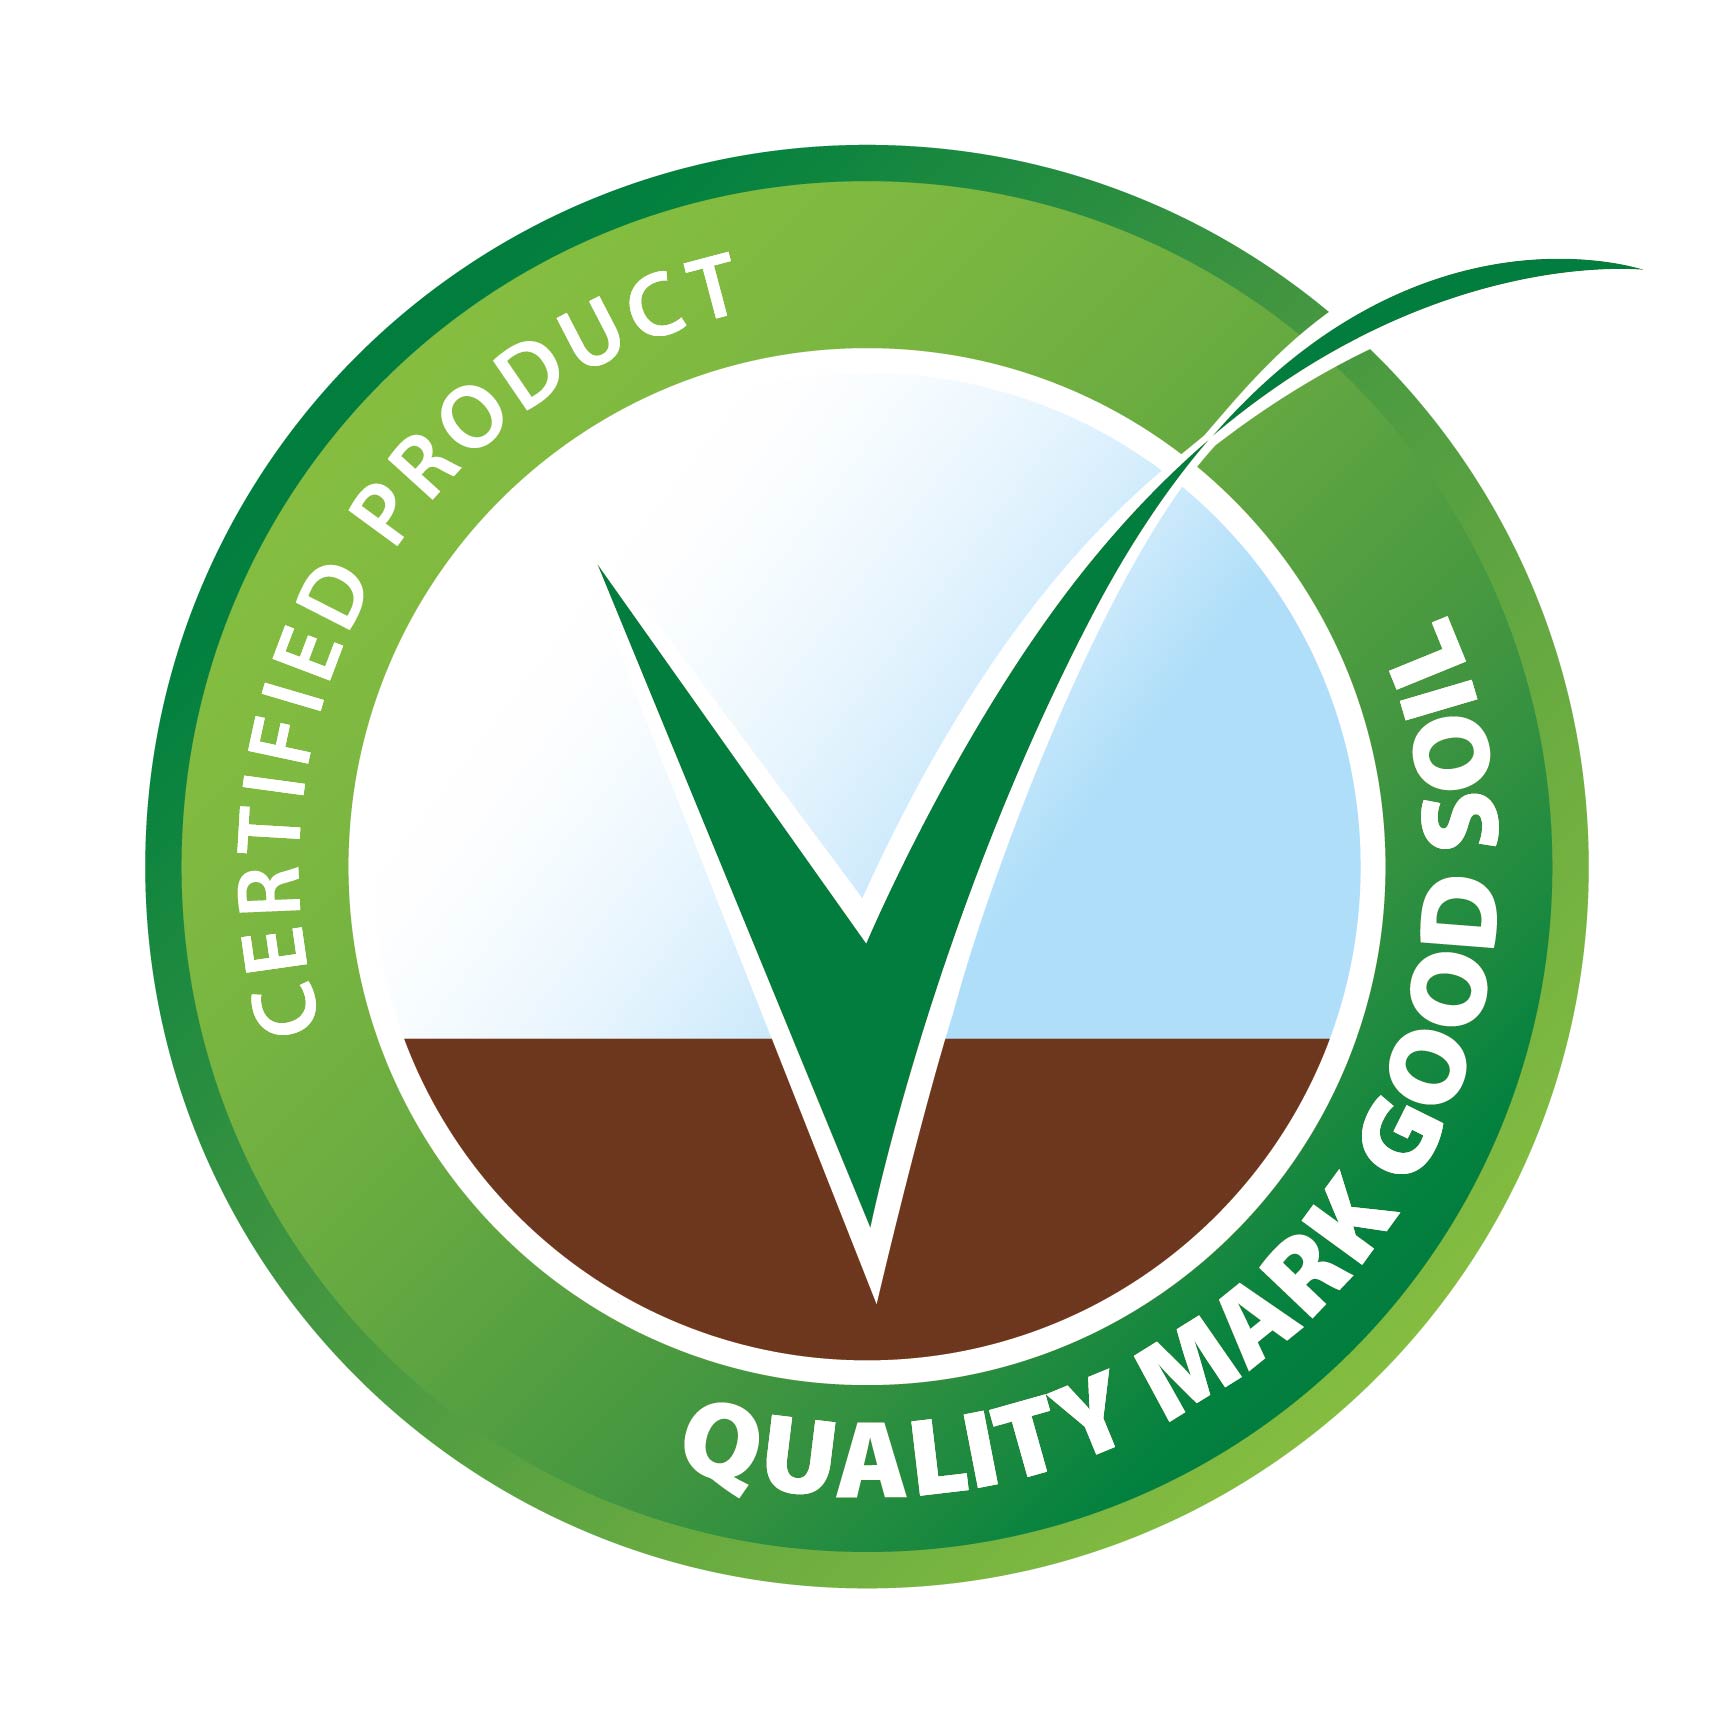 QMGS – Quality Mark Good Soil